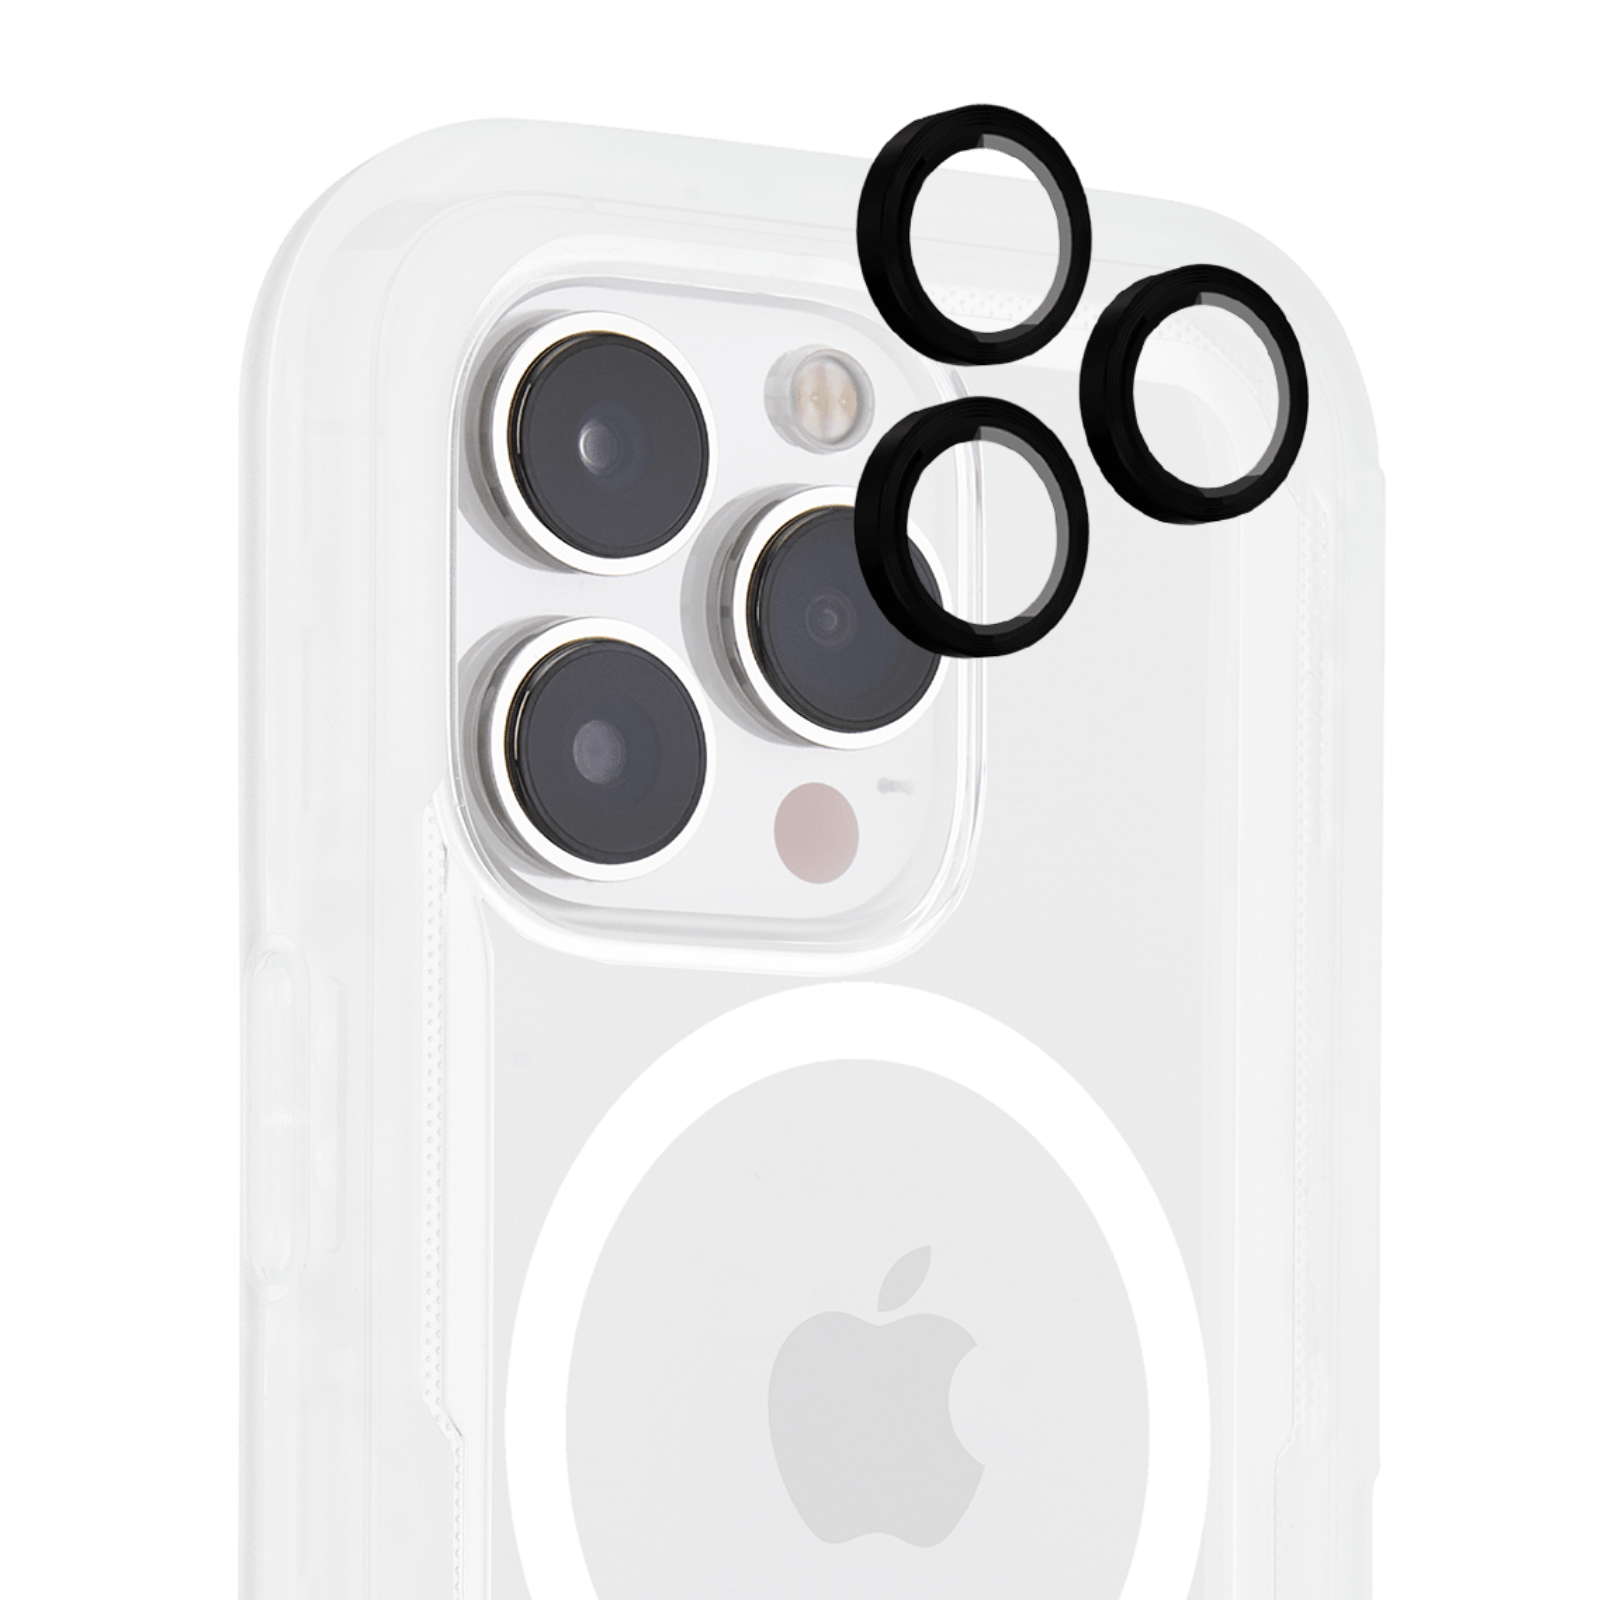 Pelican Lens Protector Rings (Aluminum) - iPhone 14 Pro / 14 Pro Max